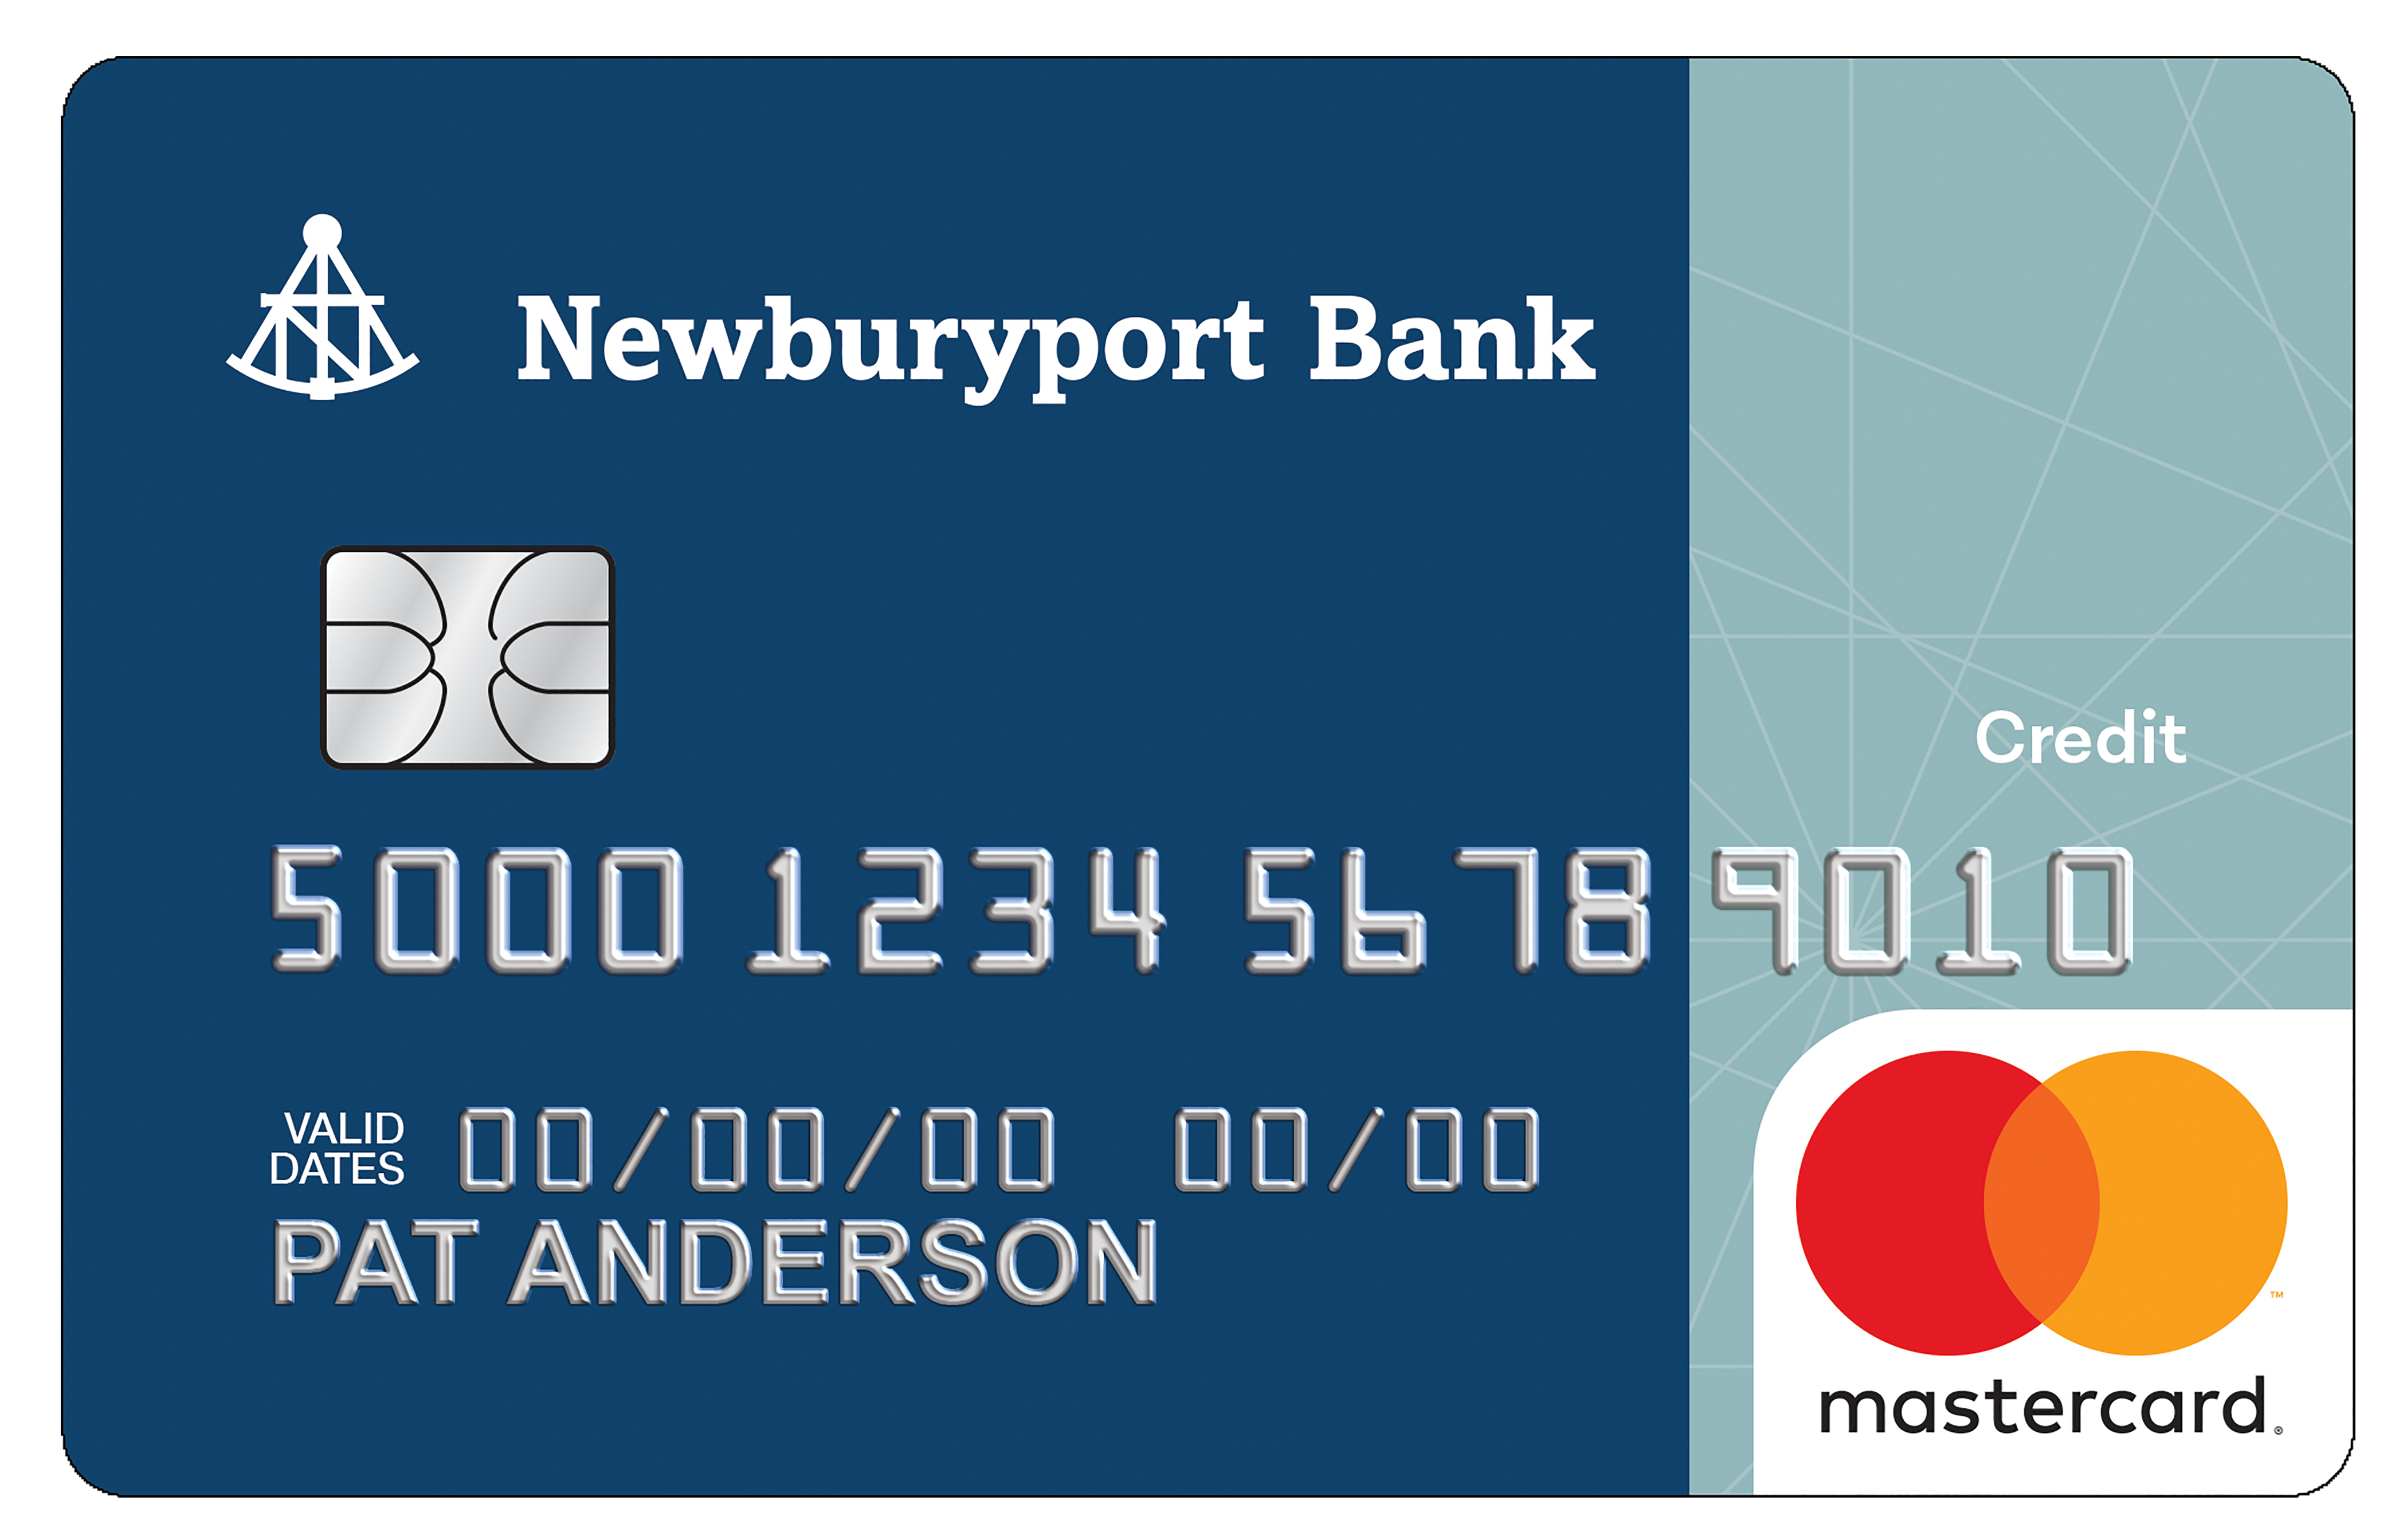 Newburyport Five Cents Savings Bank